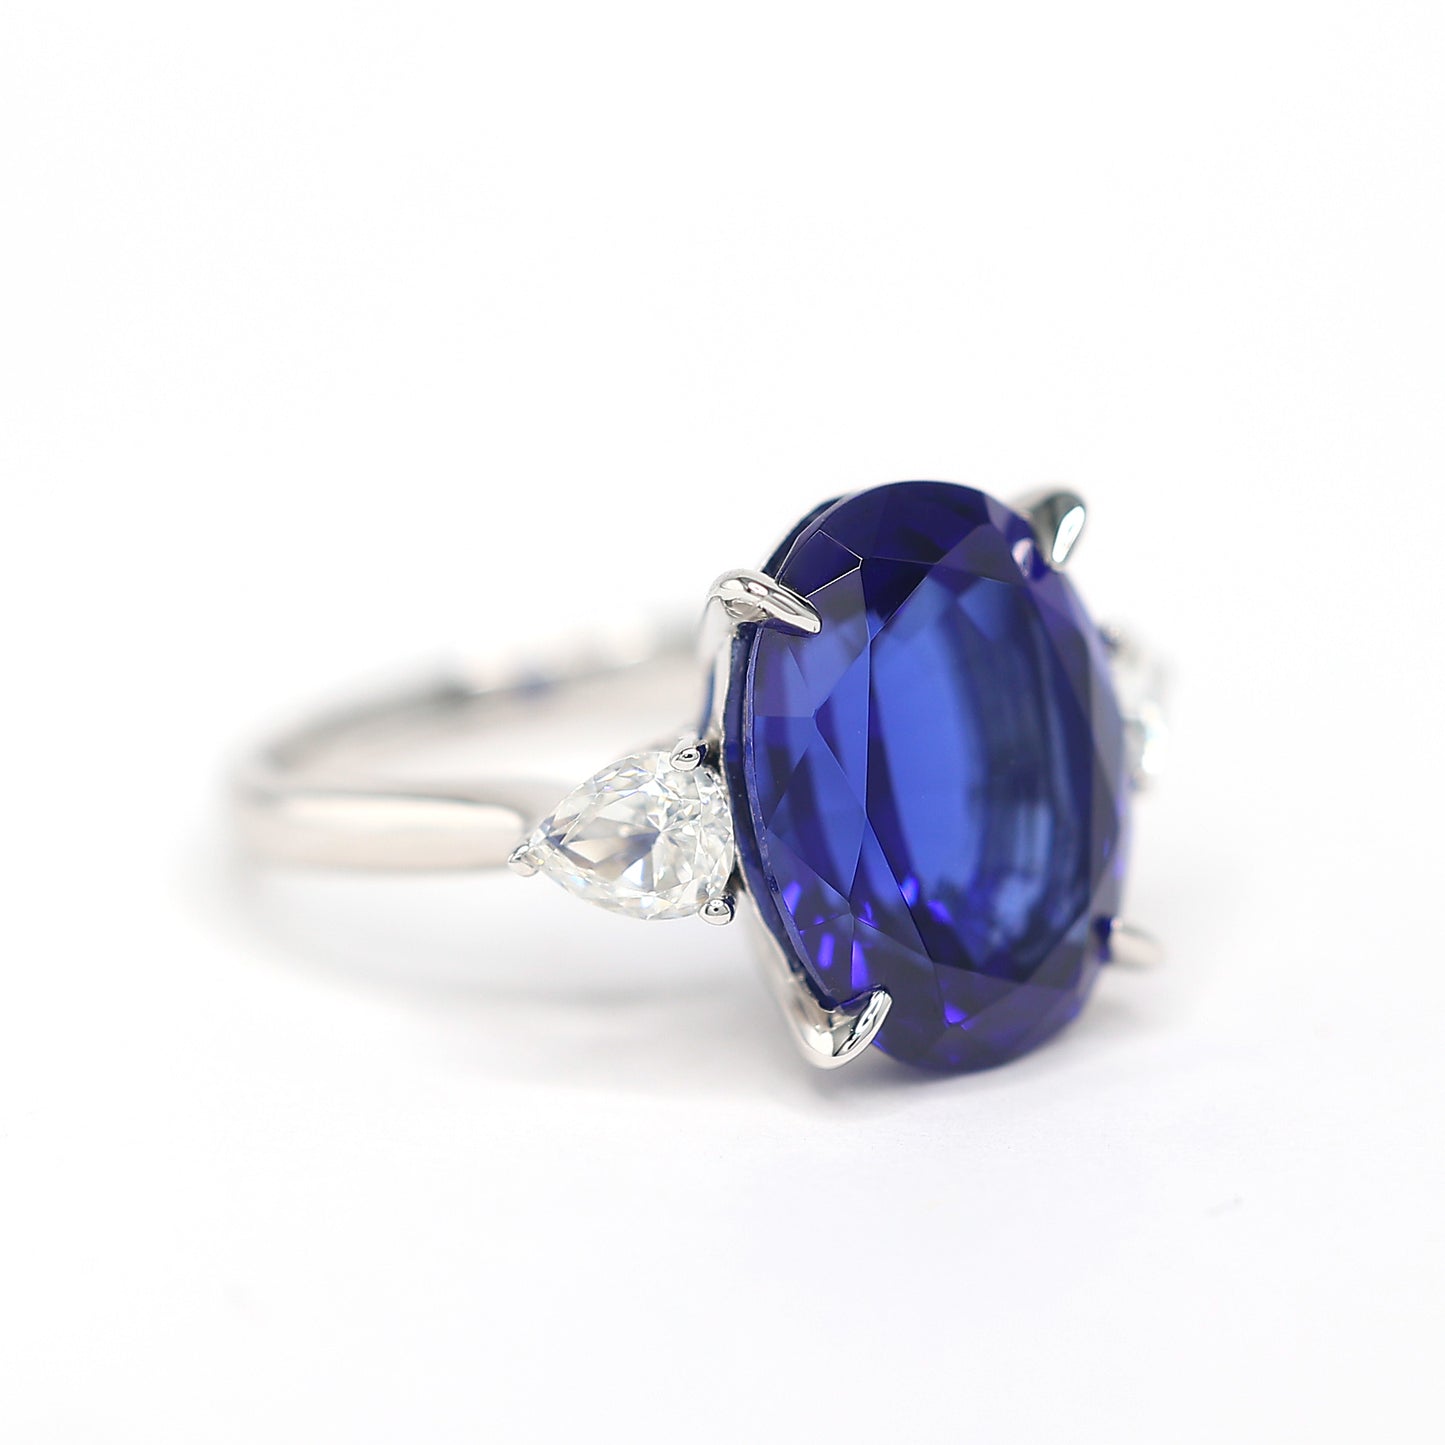 Promotion design Sapphire color pigeon egg shape ring, sterling silver. (10 carat)